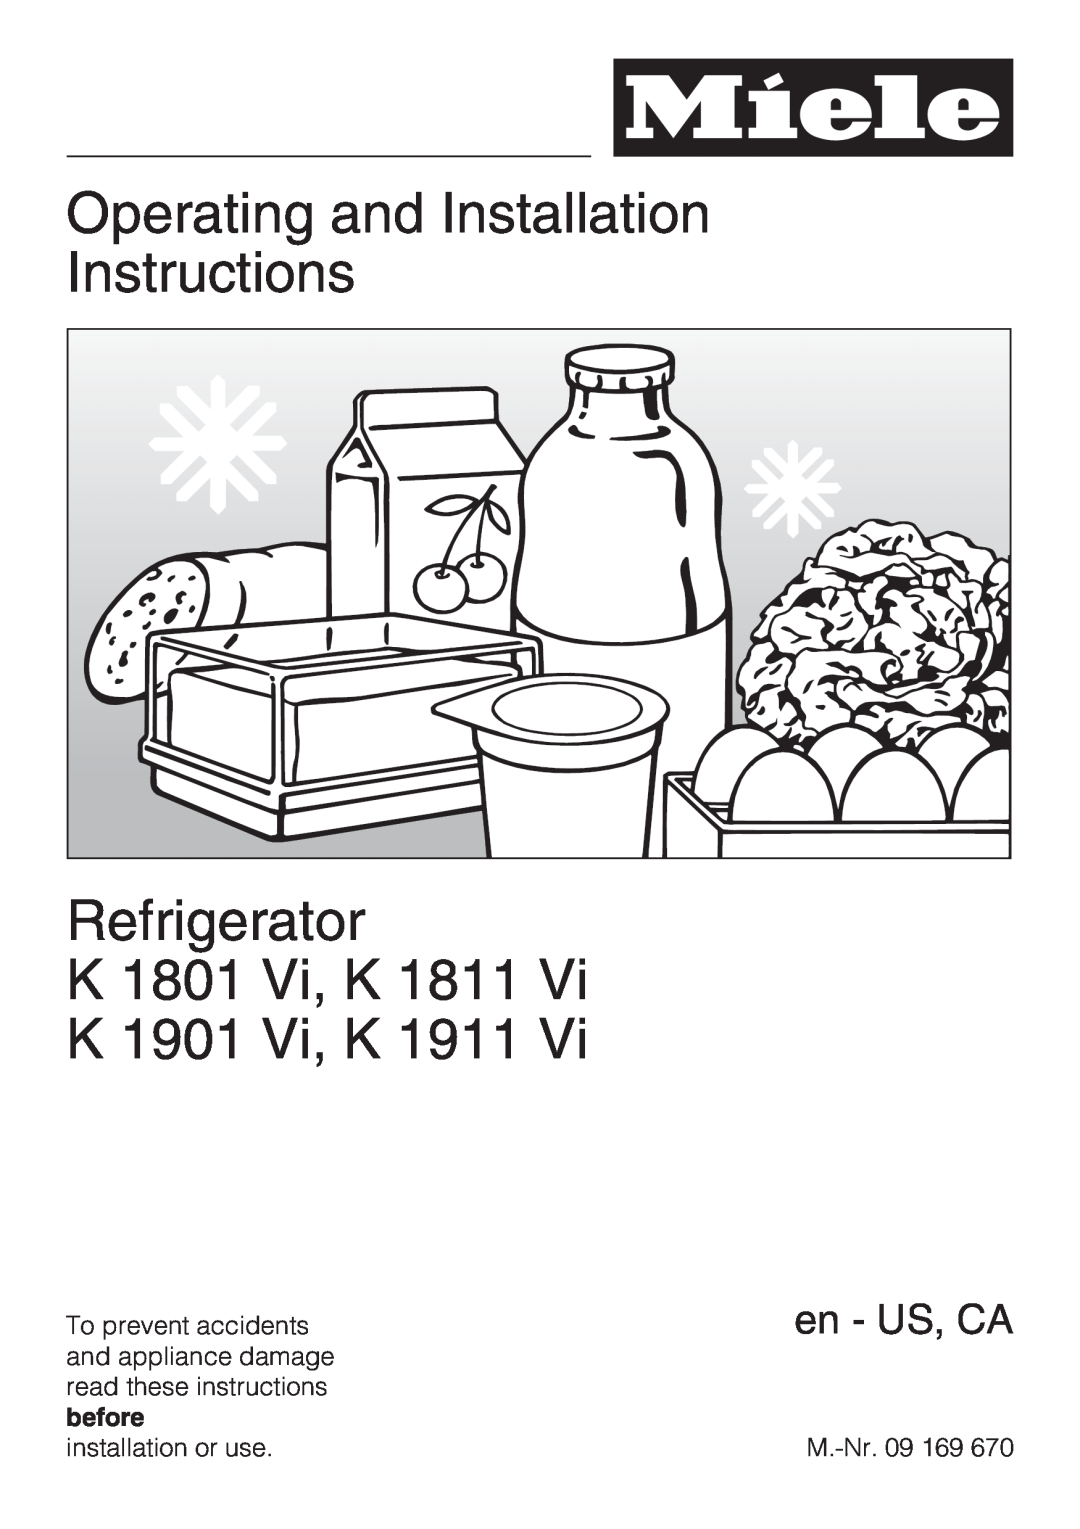 Miele K 1901 Vi, K 1911 Vi, K 1801 Vi installation instructions Operating and Installation Instructions, en - US, CA 